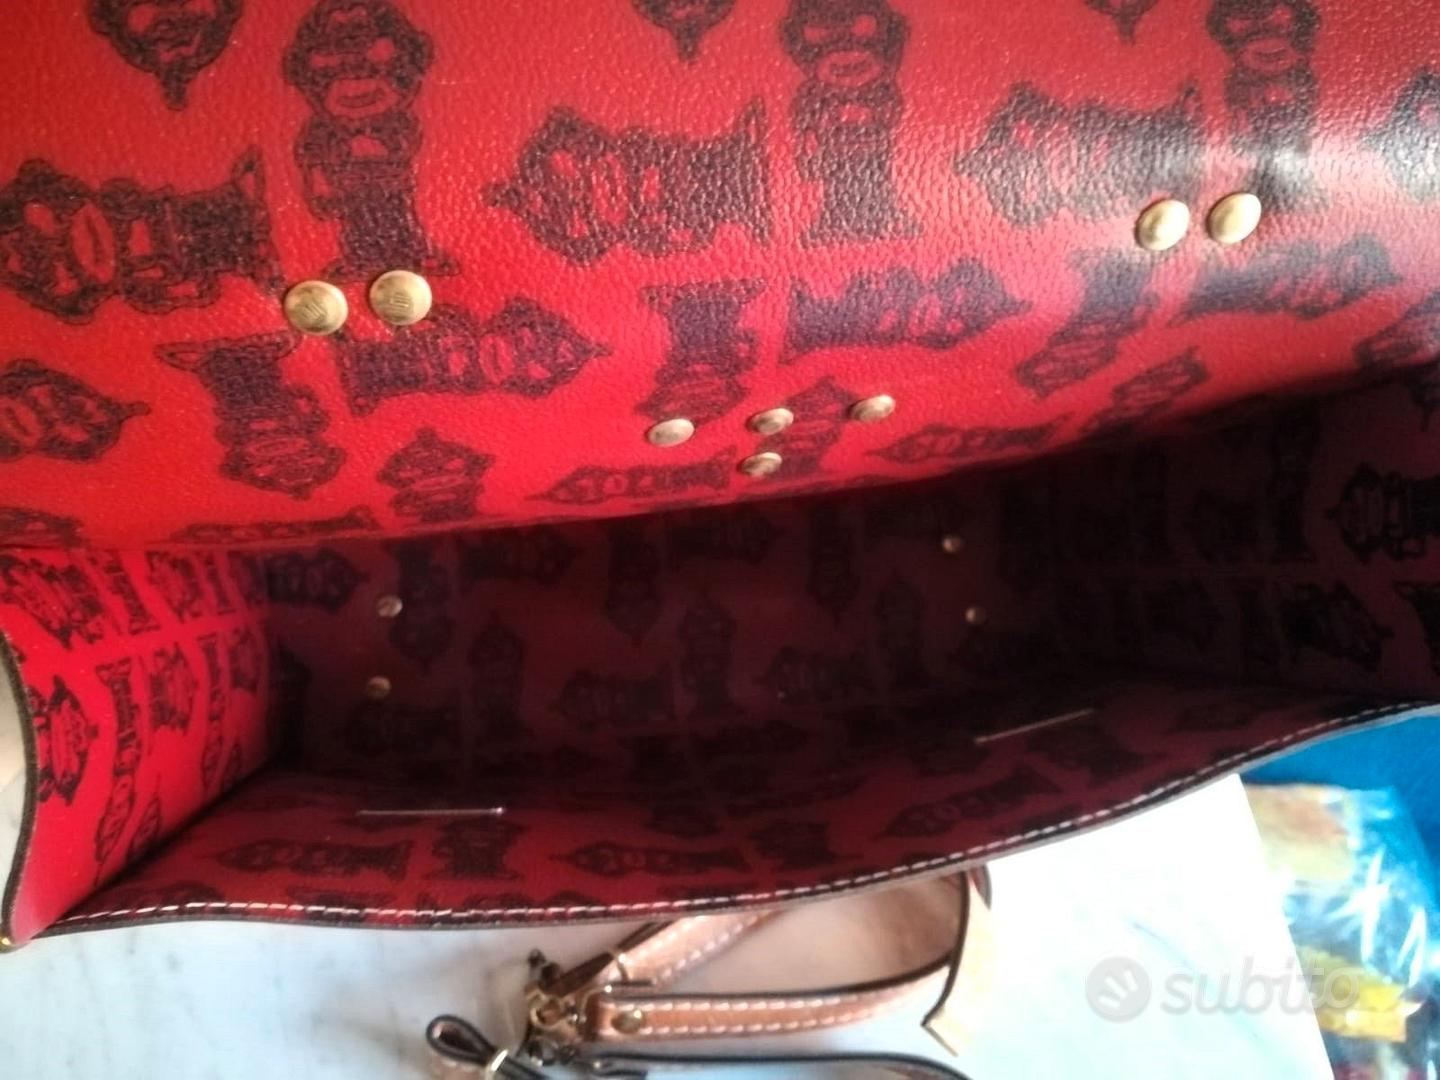 Munari Double Compartment Vachetta Leather Bag